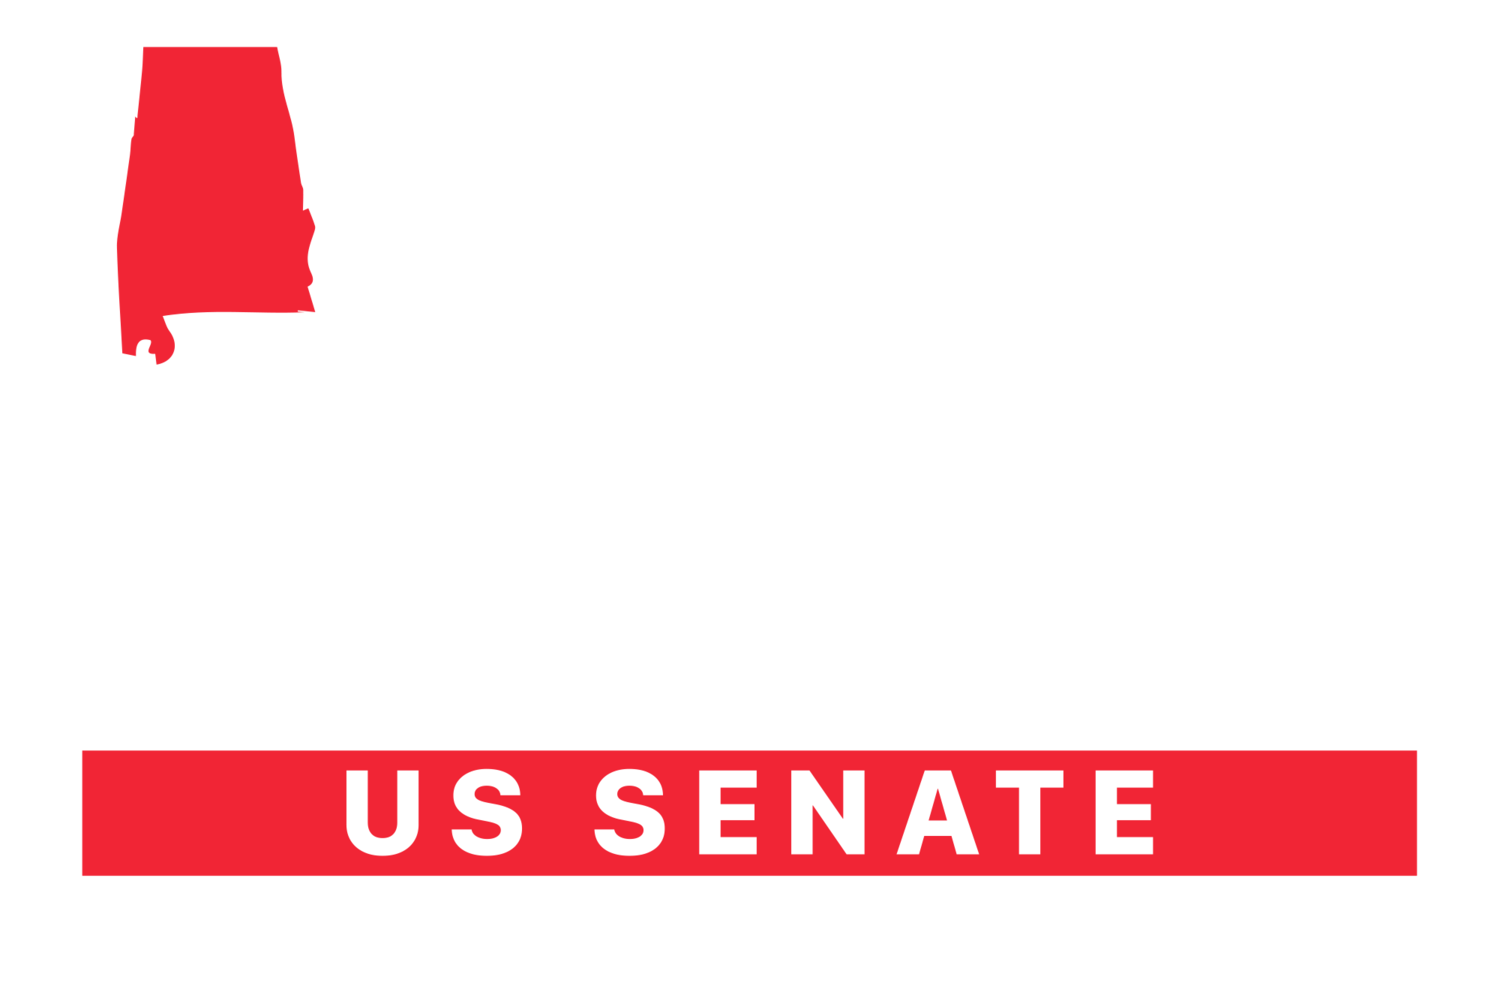 U.S. Sen. Katie Britt (R-AL)